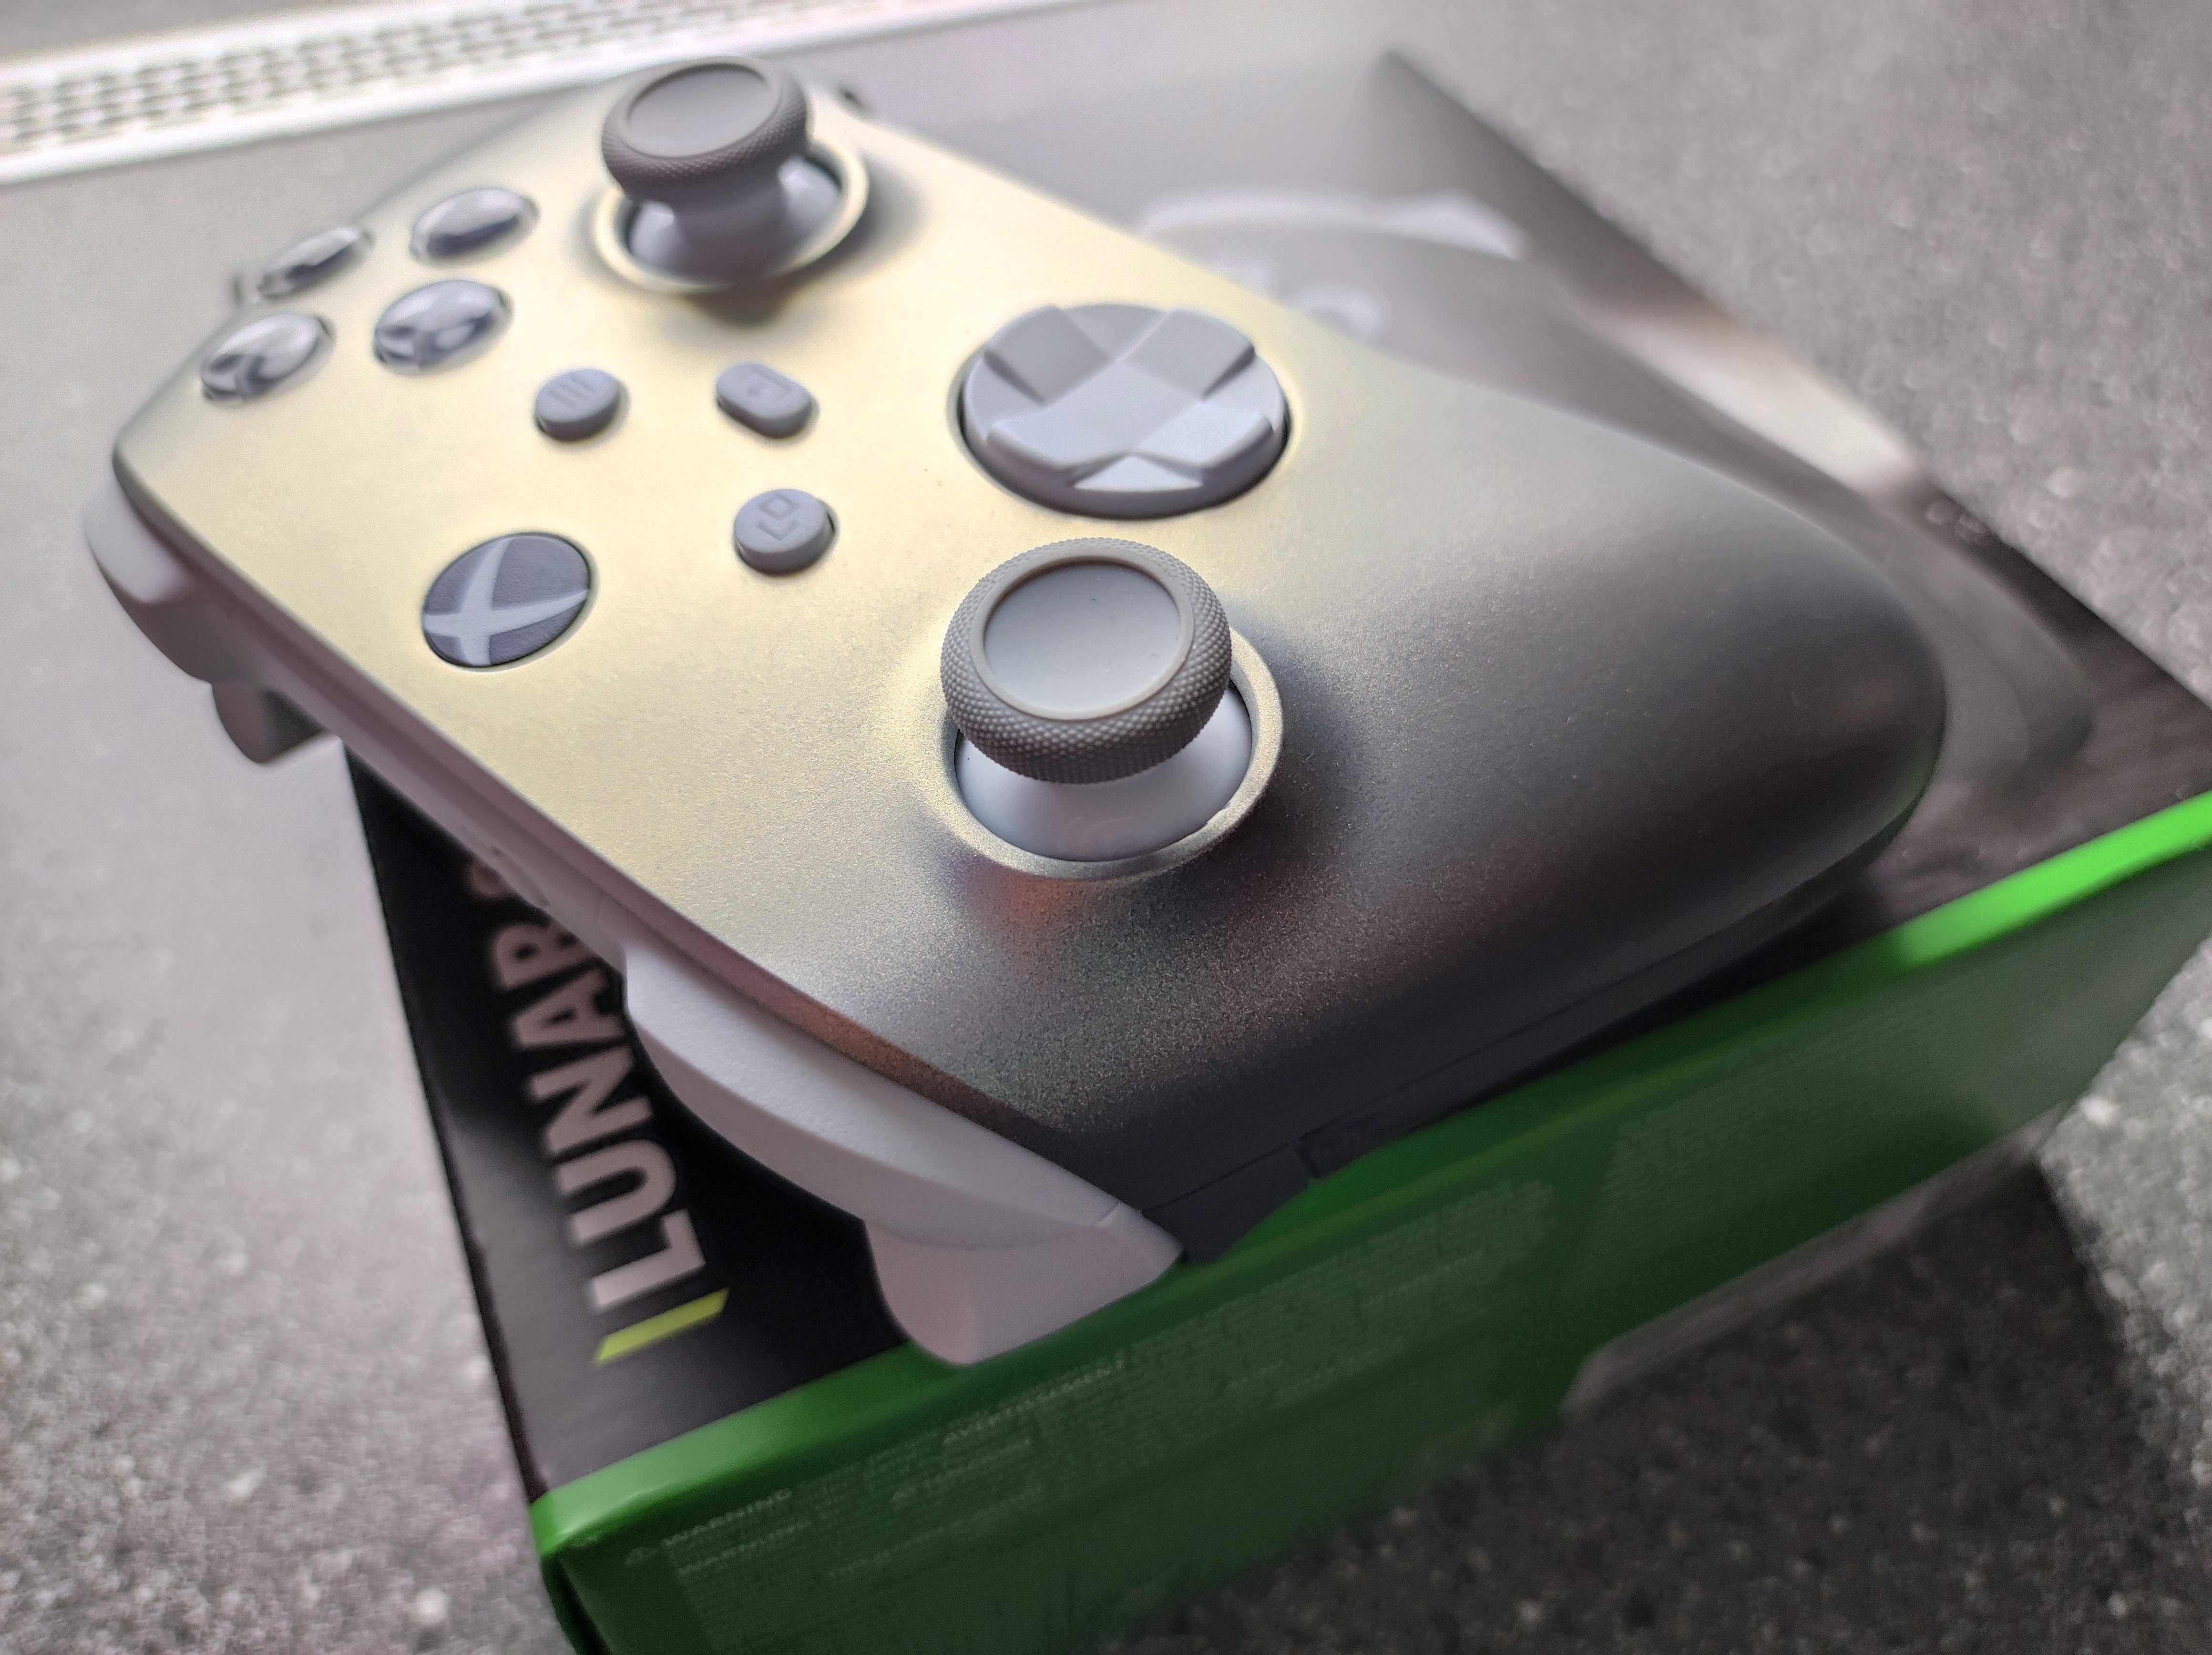 Pad kontroler do PC Xbox one series Lunar Shift nowy w pudełku